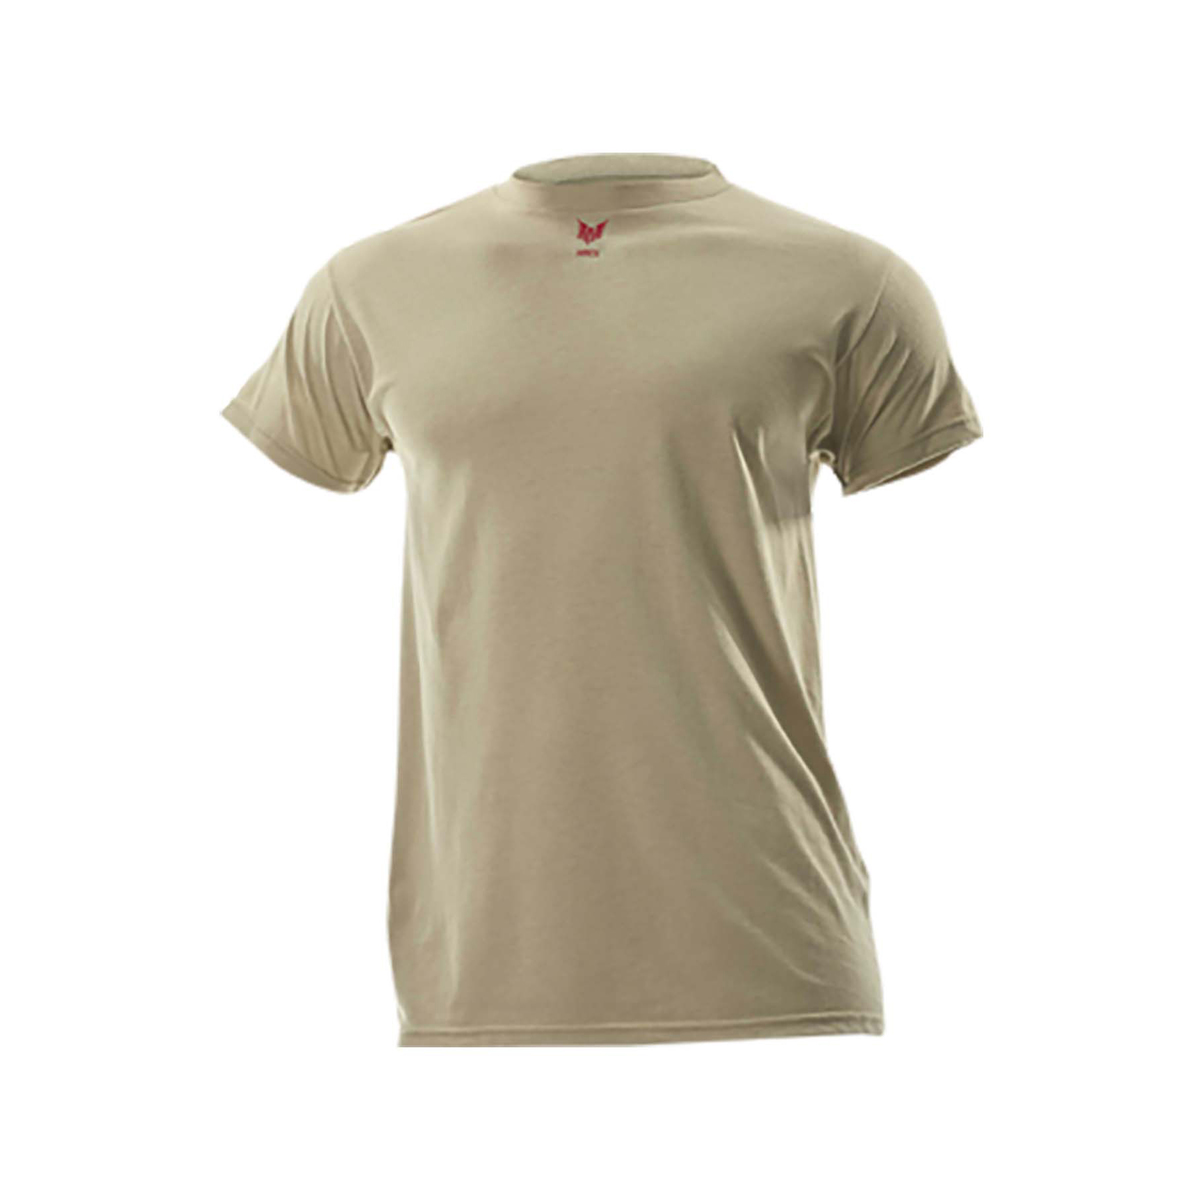 National Safety Apparel Medium Desert Sand DRIFIRE® Lite Baselayer Lightweight Flame Resistant Base Layer T-Shirt